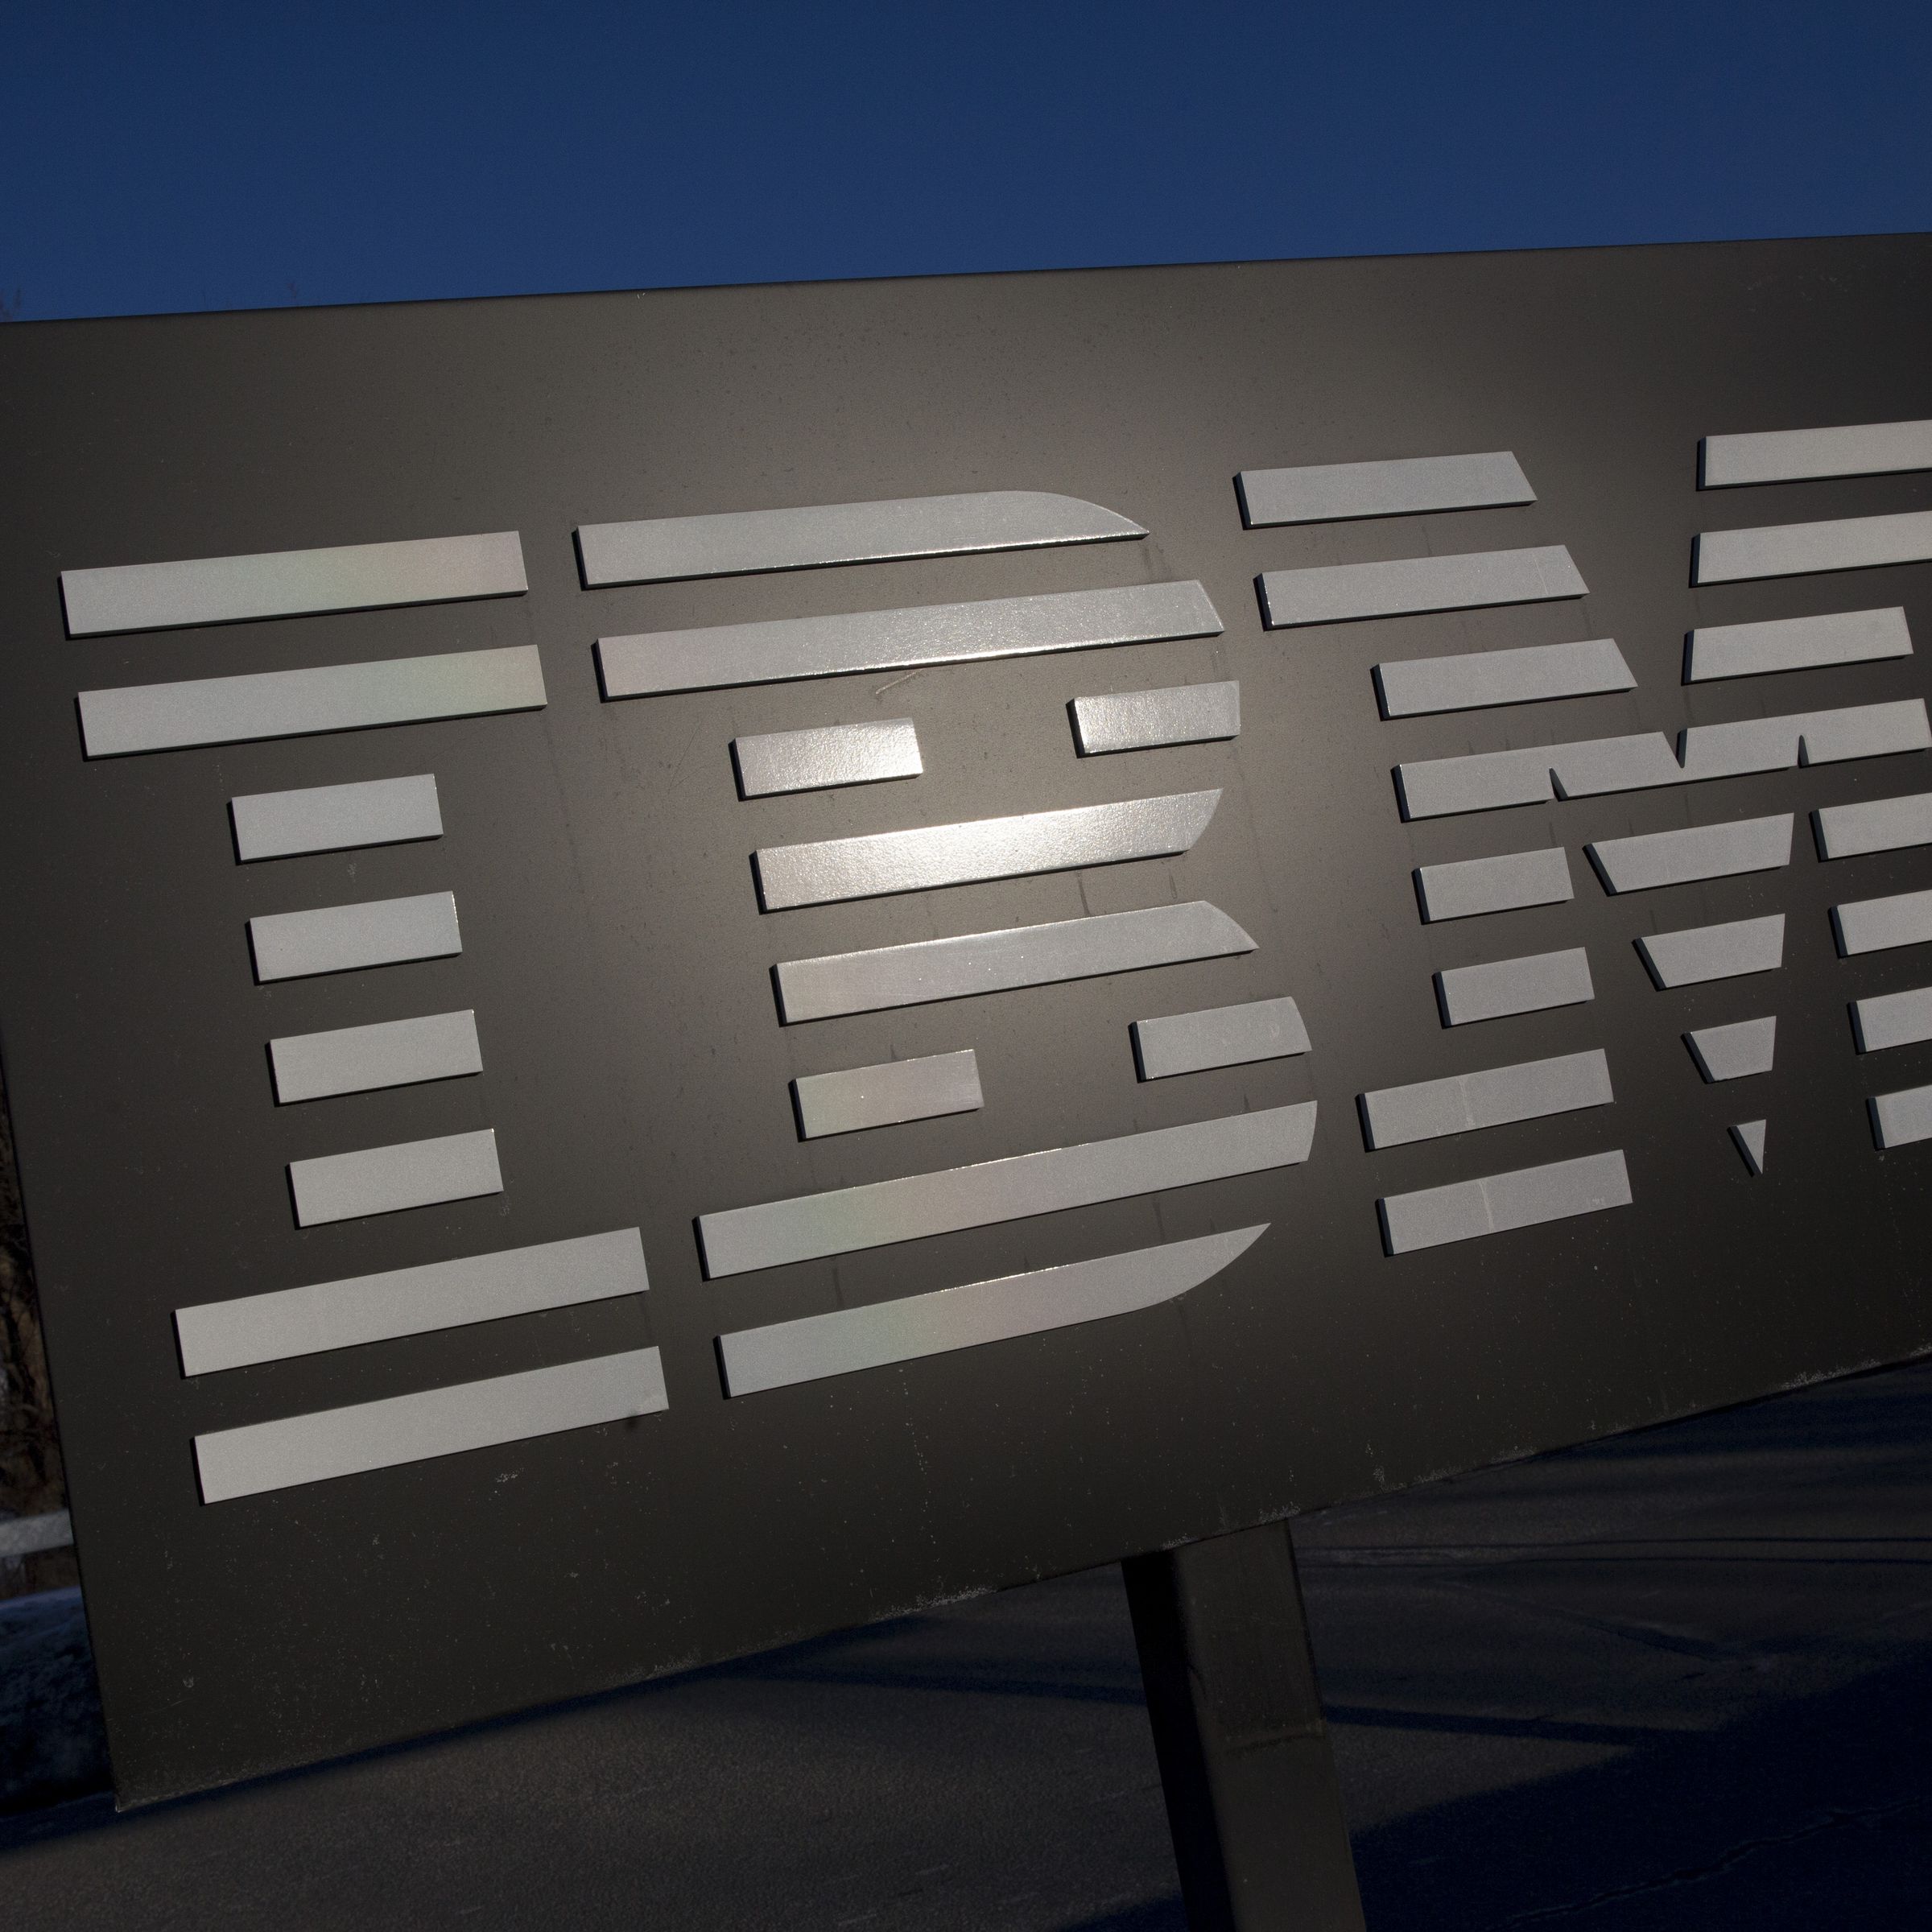 Inside IBM Research Headquarters